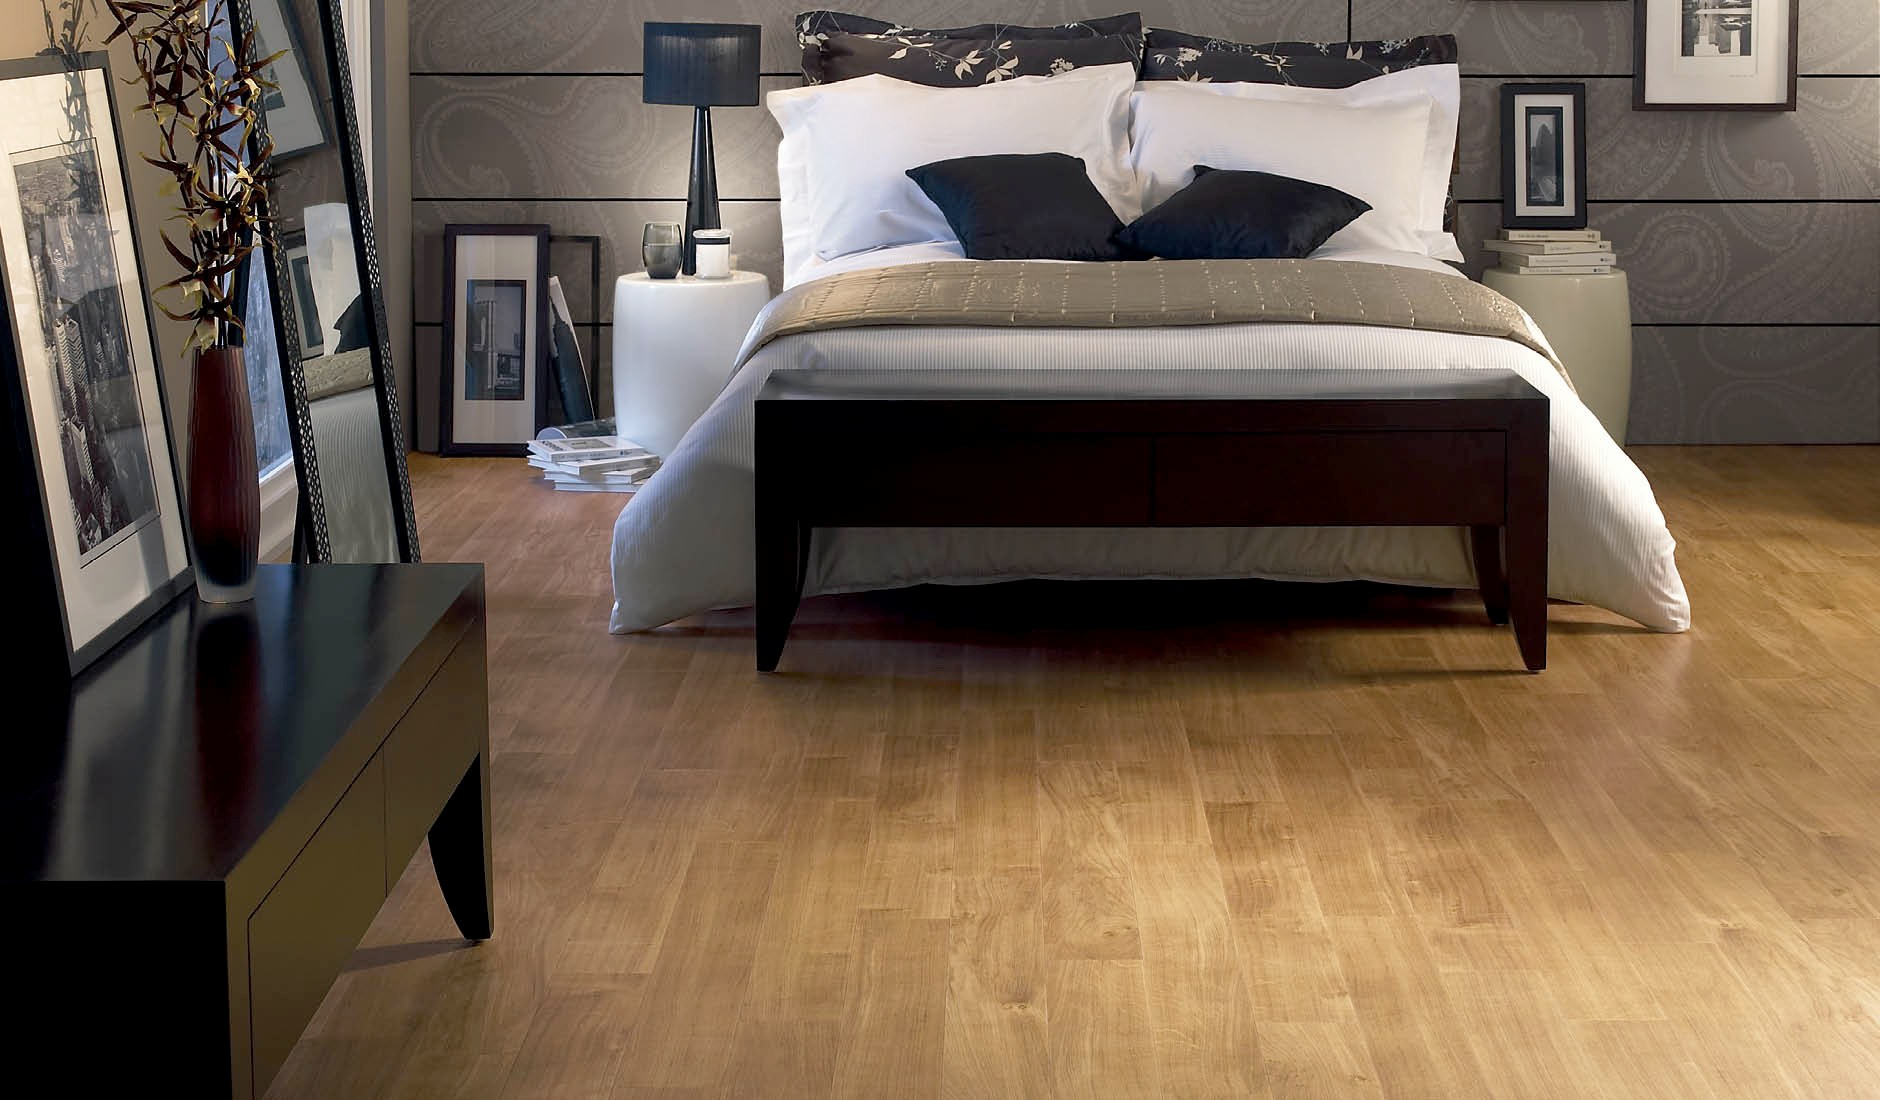 Bedroom Decor With Dark Wood Floors